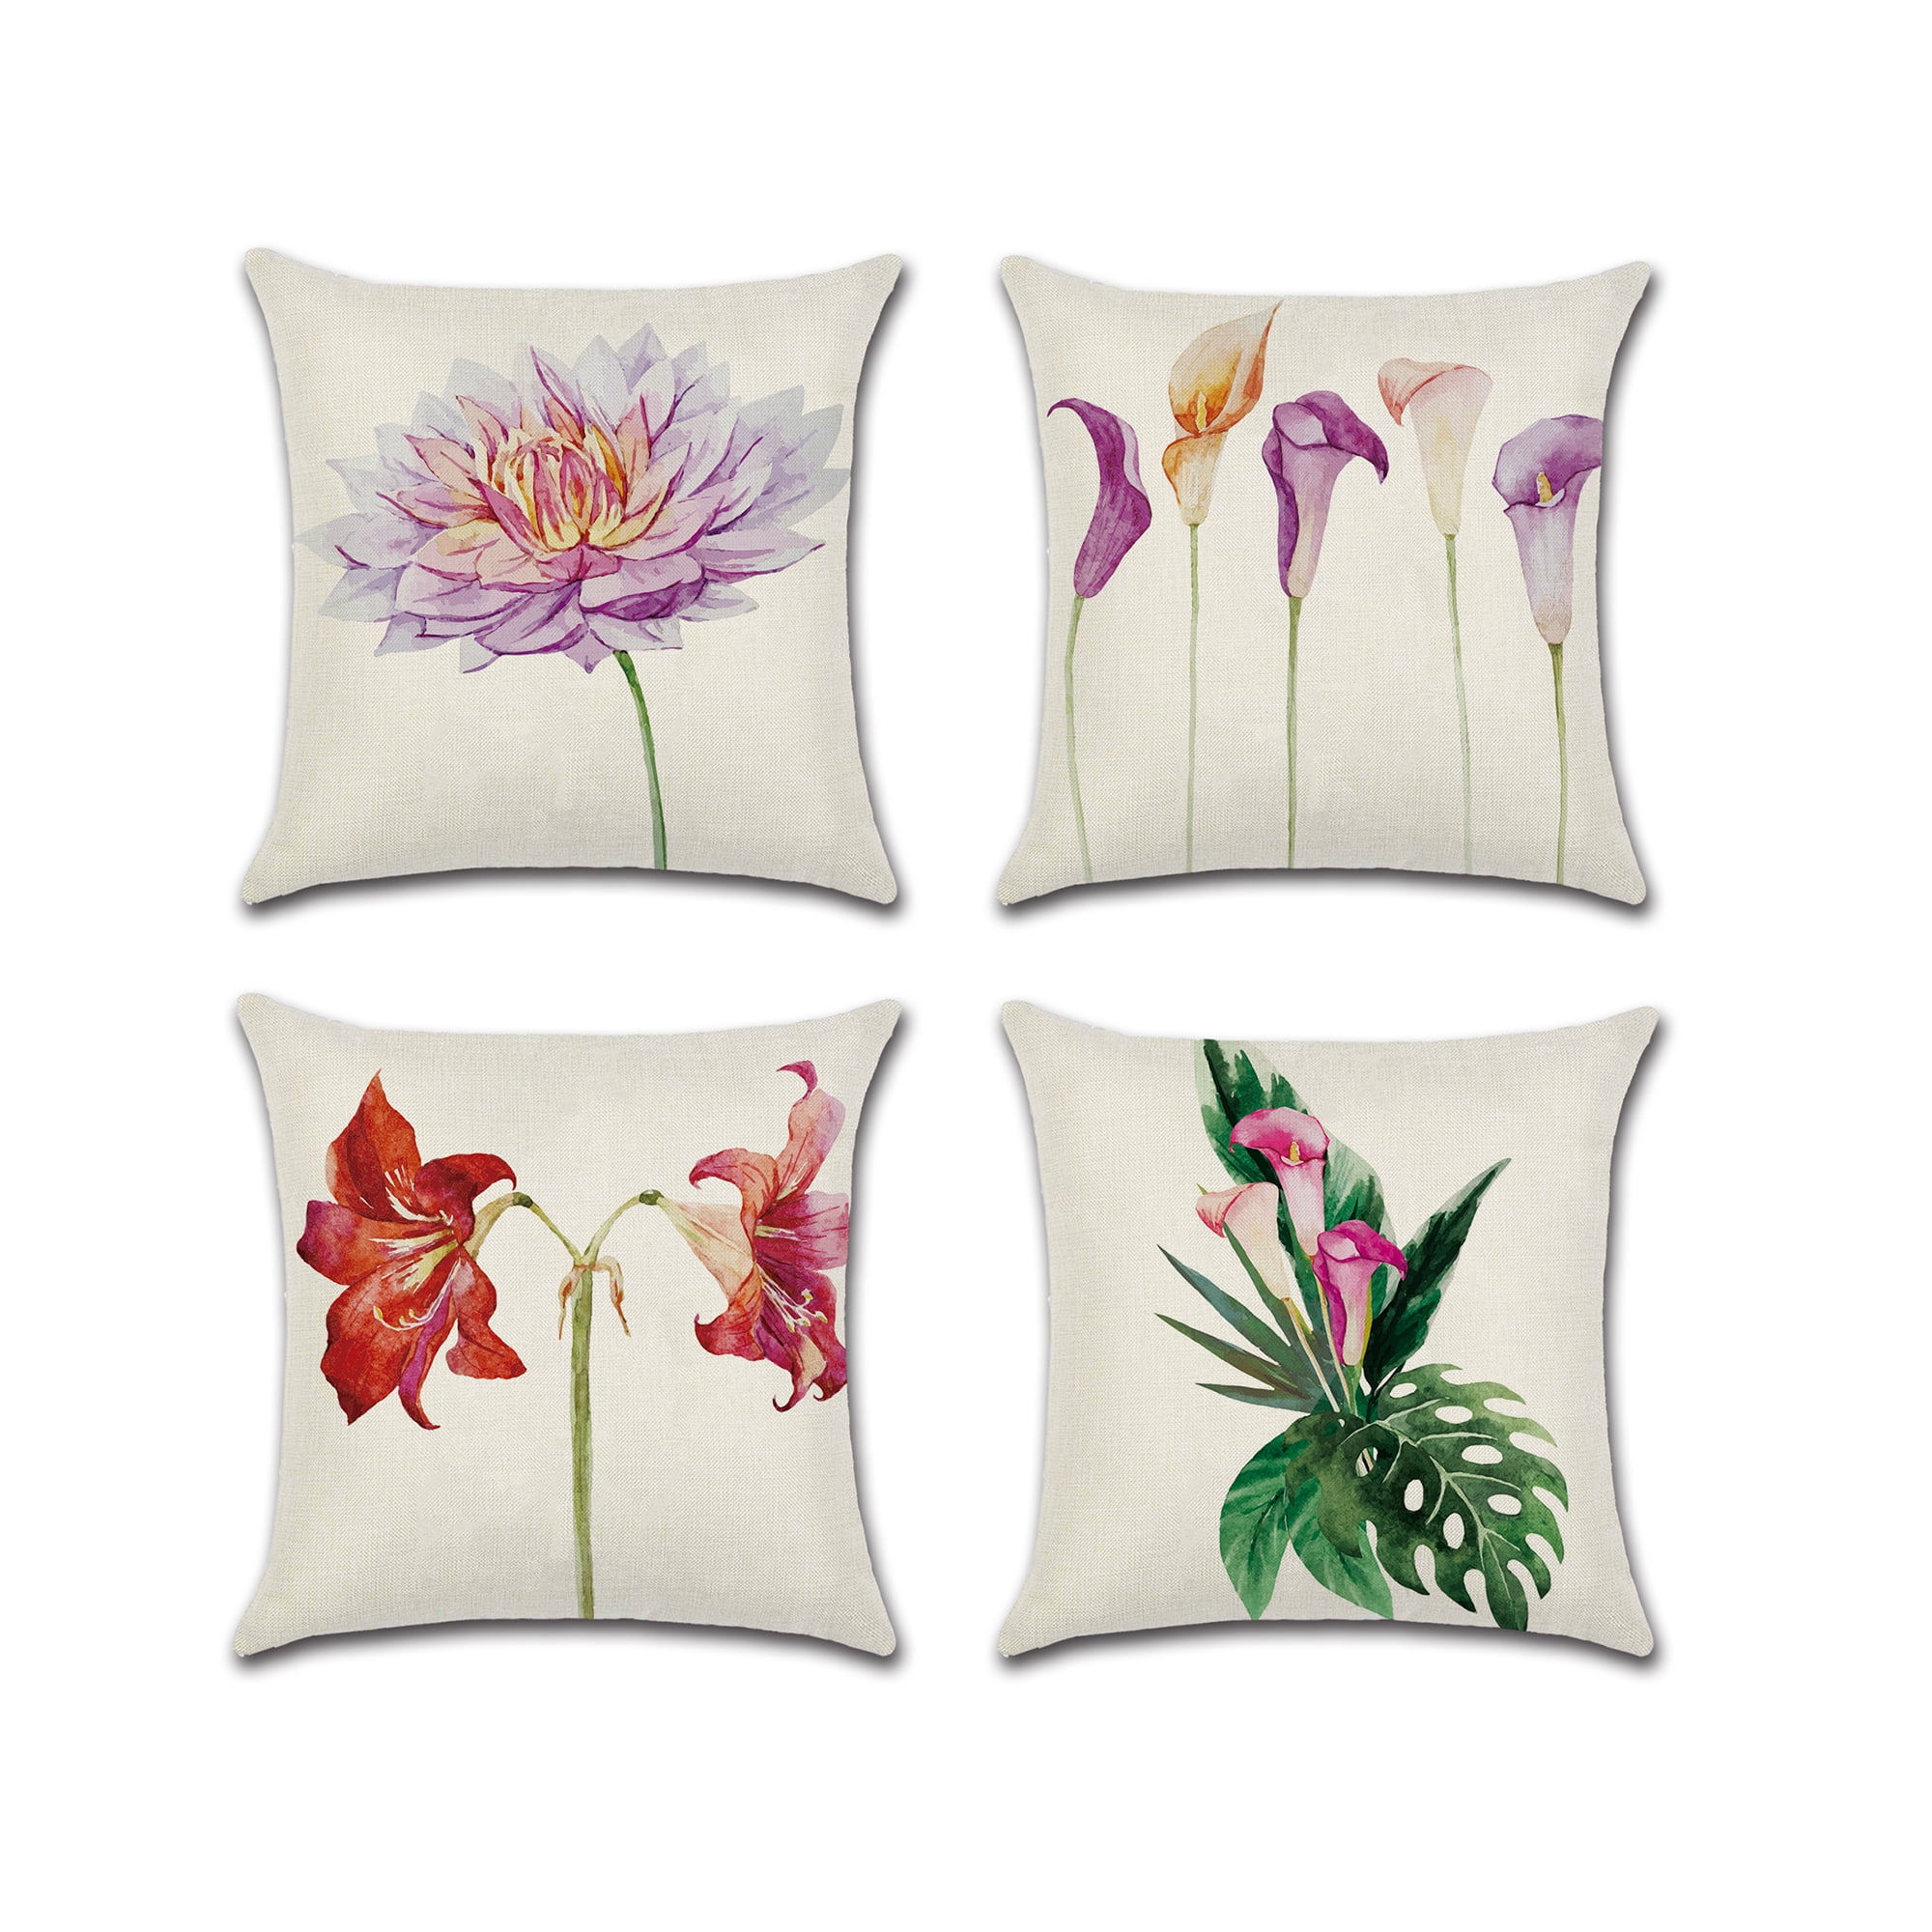 Floral 3D Cushion Cover Soft Satin Fabric Multicolor Home Decoration Pillow Case 